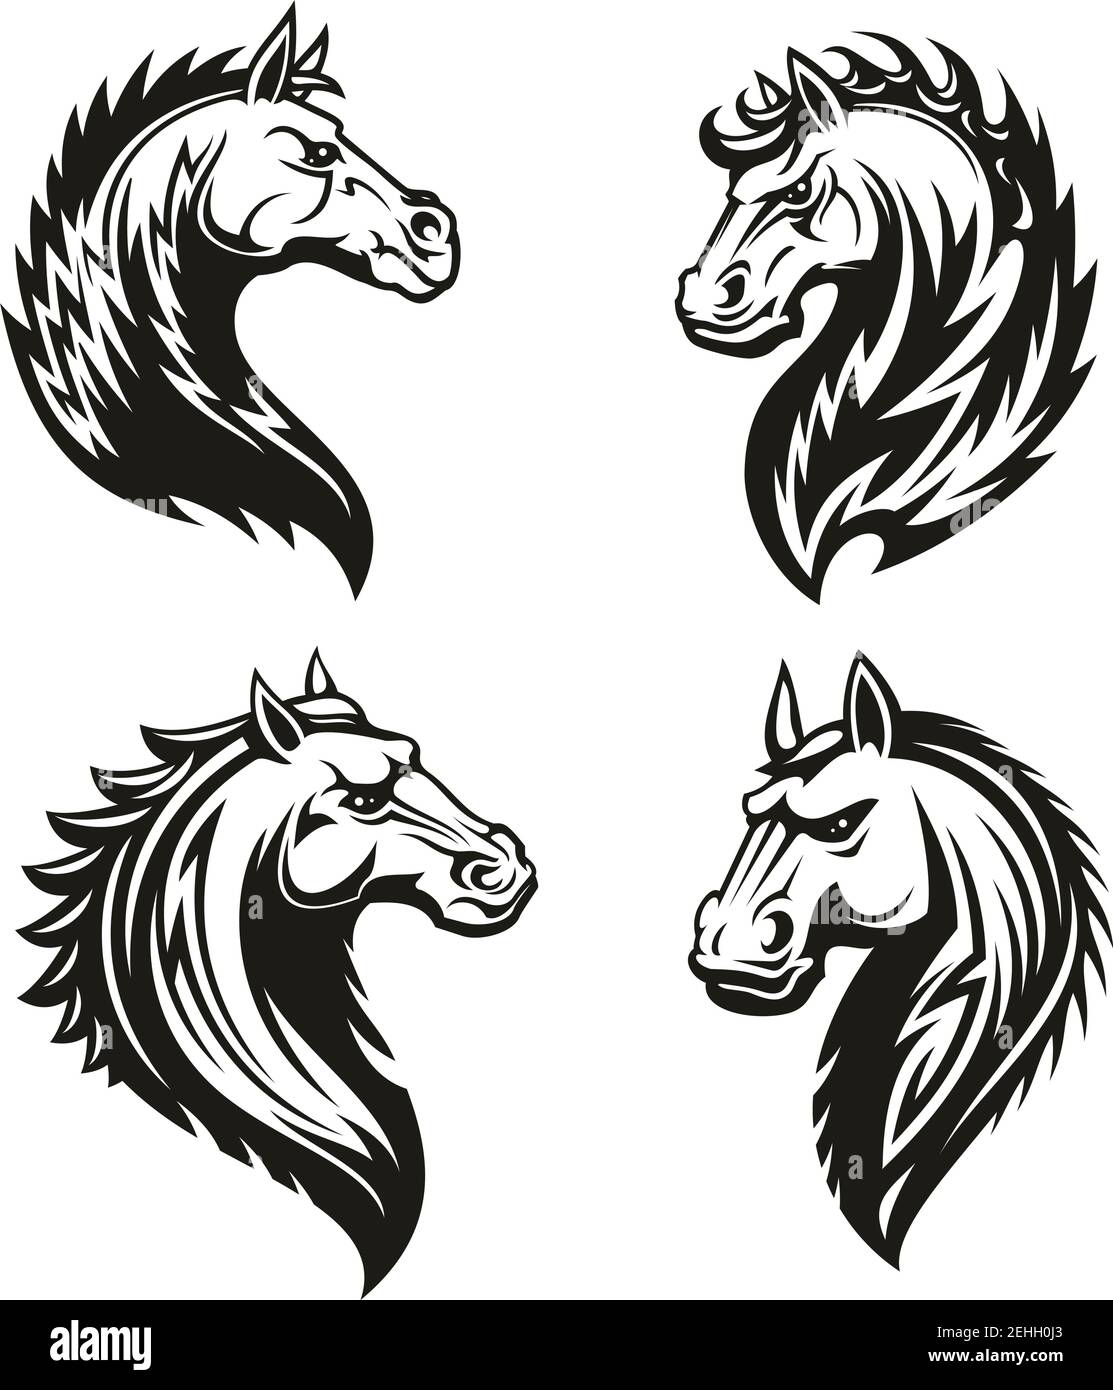 Racing Horse Stallion Tribal Style Tattoo Stock Vector Royalty Free  163814915  Shutterstock